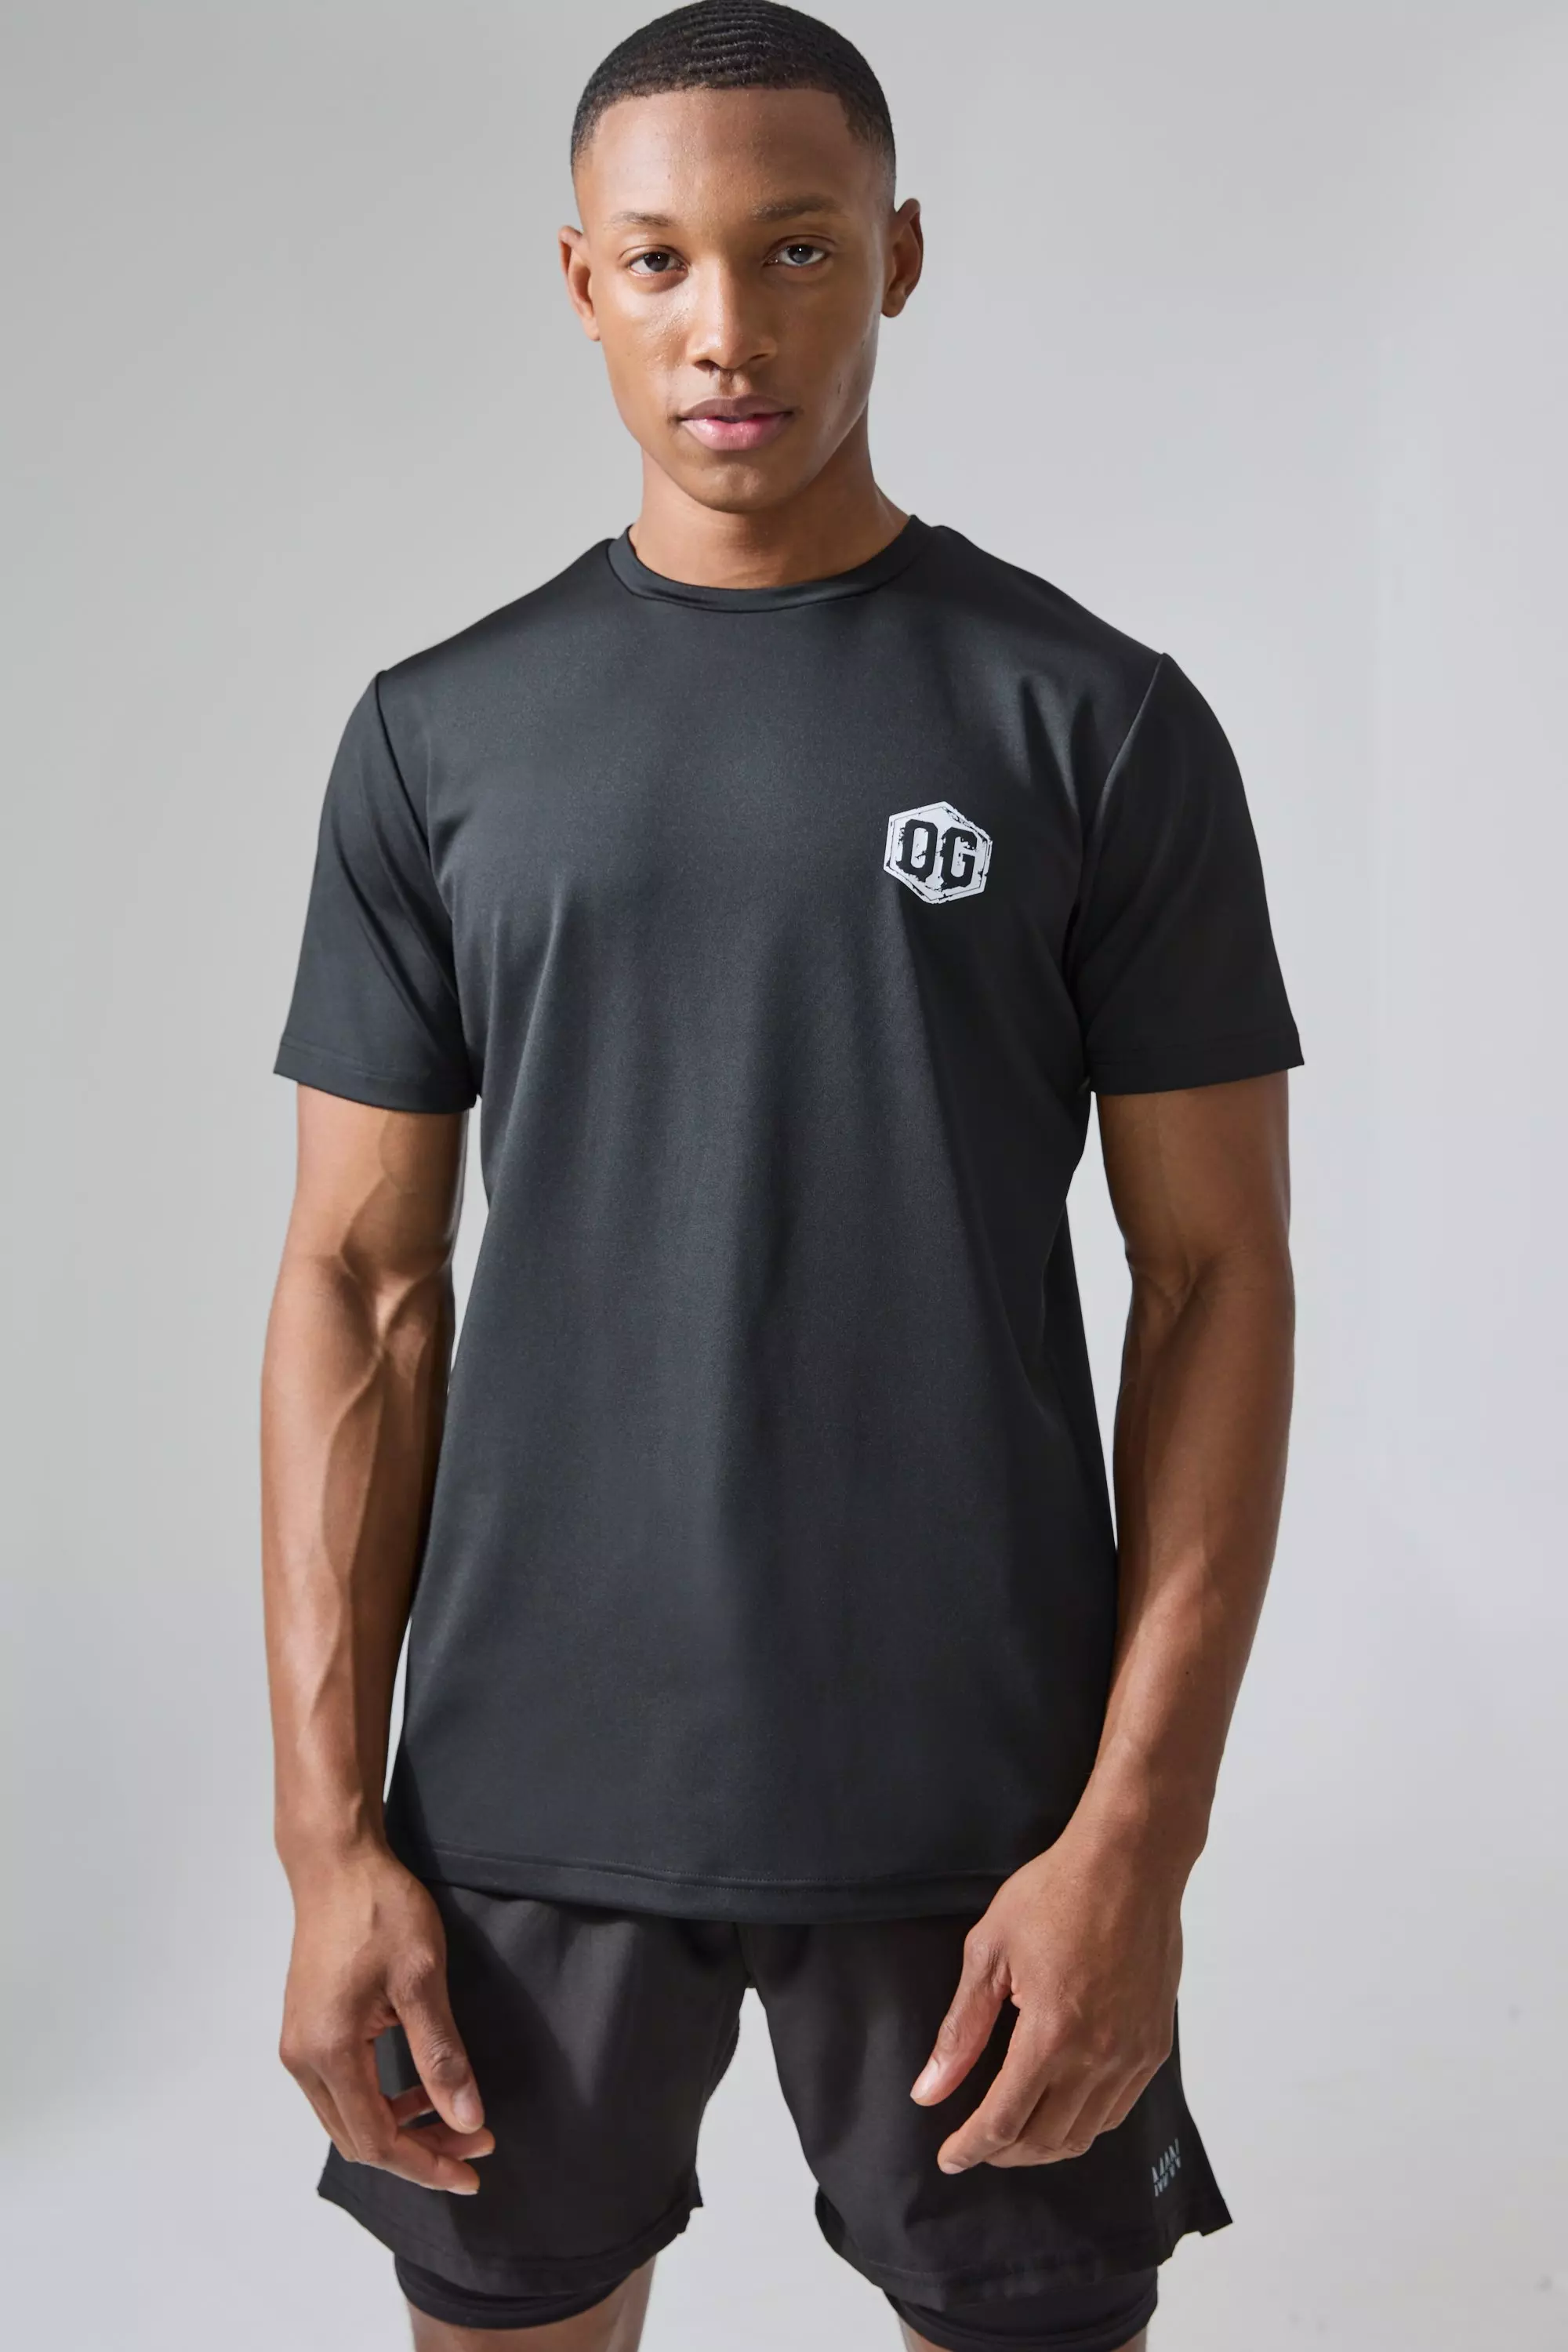 Man Active X Og Gym Regular Fit Performance T-shirt Black